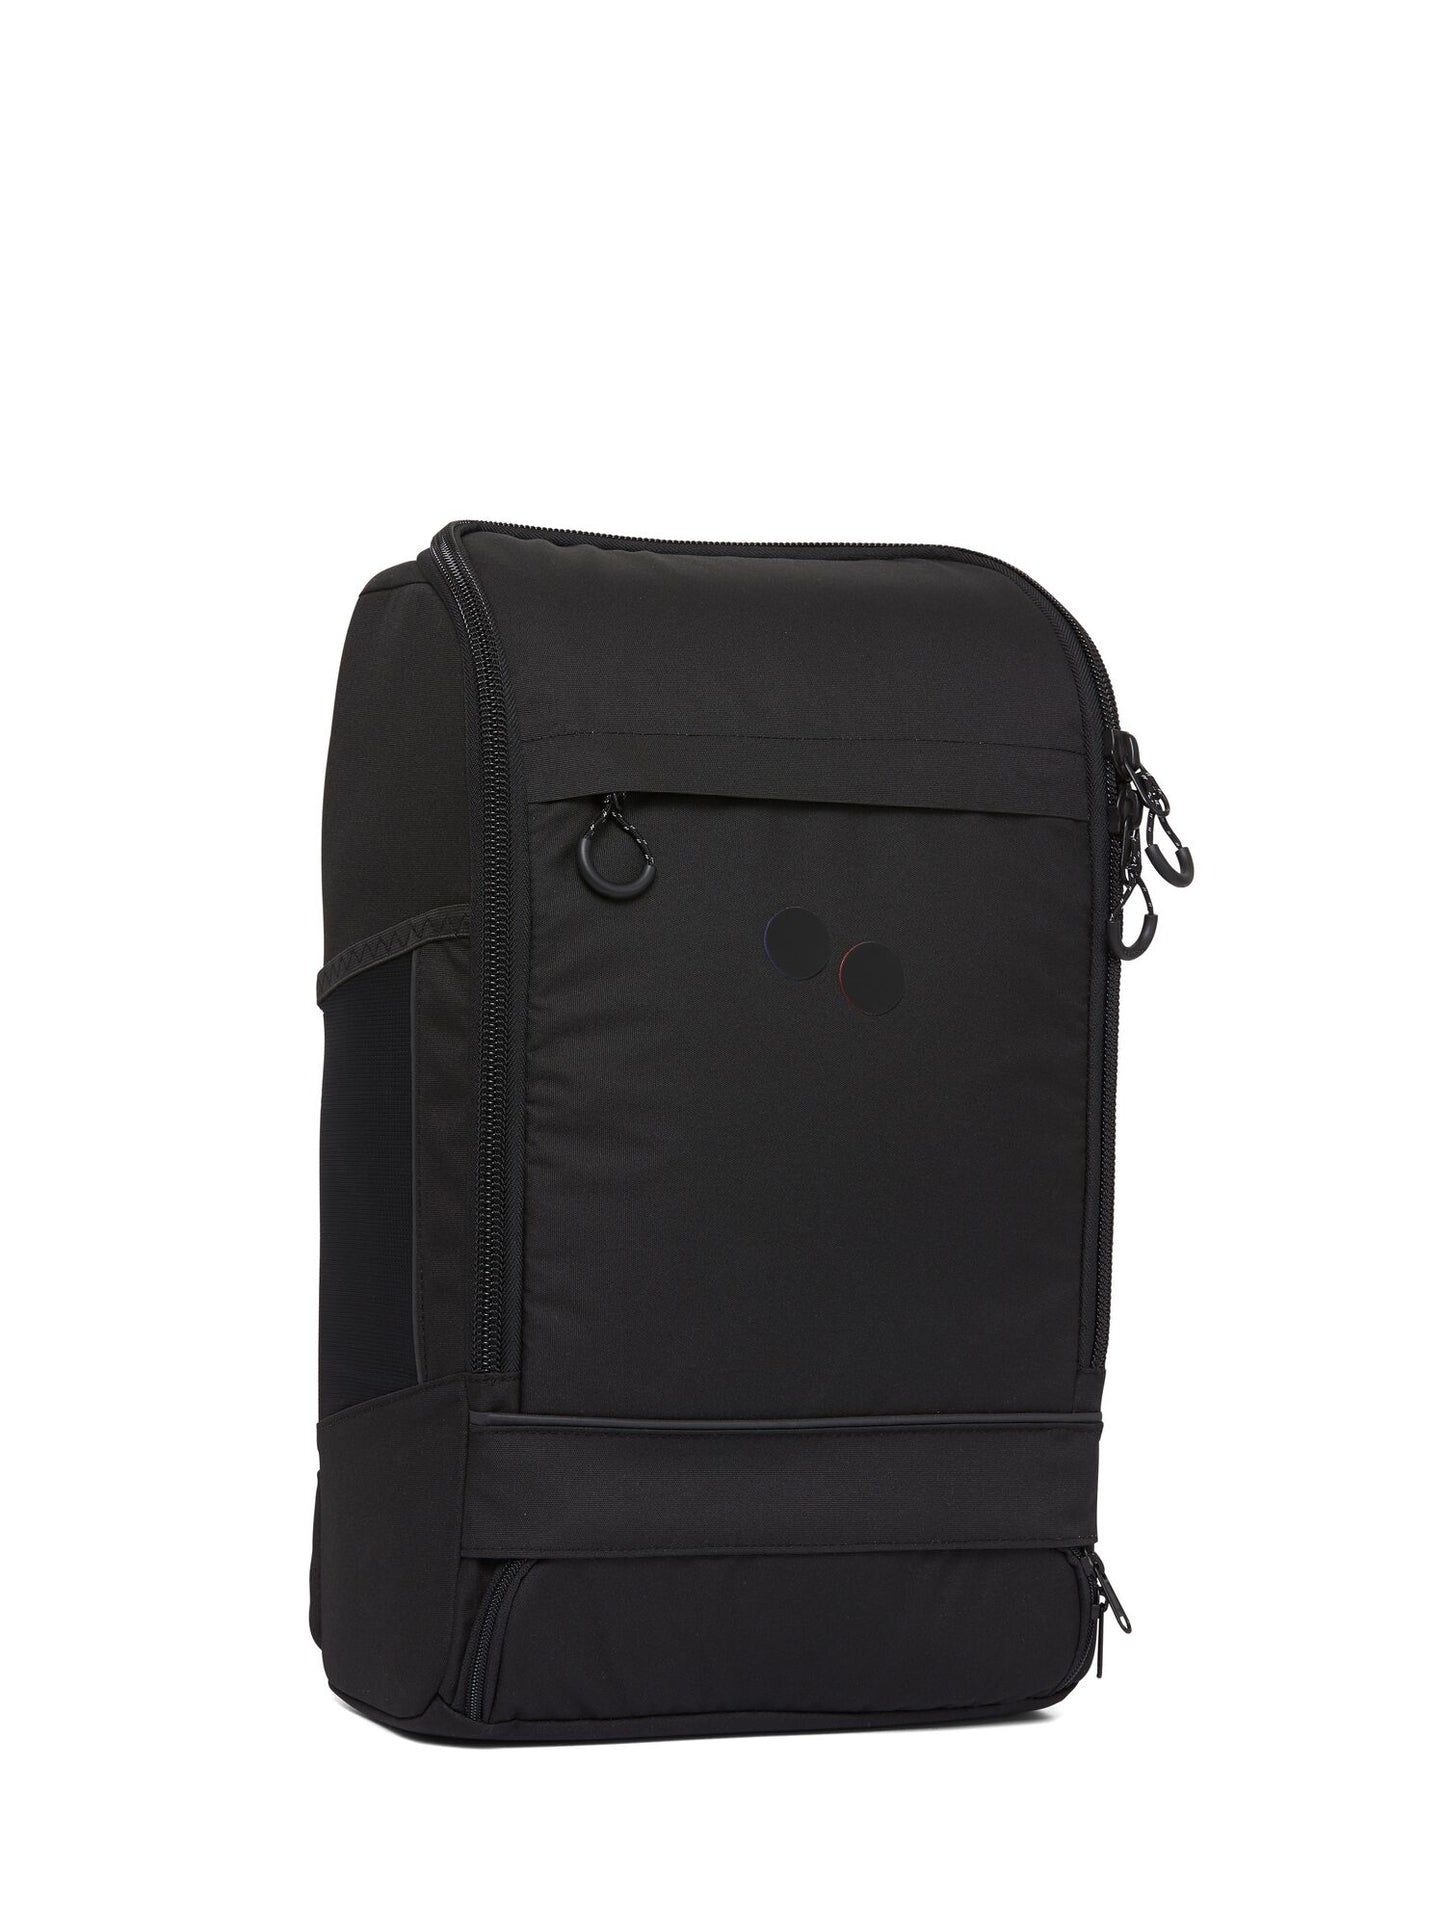 pinqponq-backpack-cubik-medium-rooted-black-front